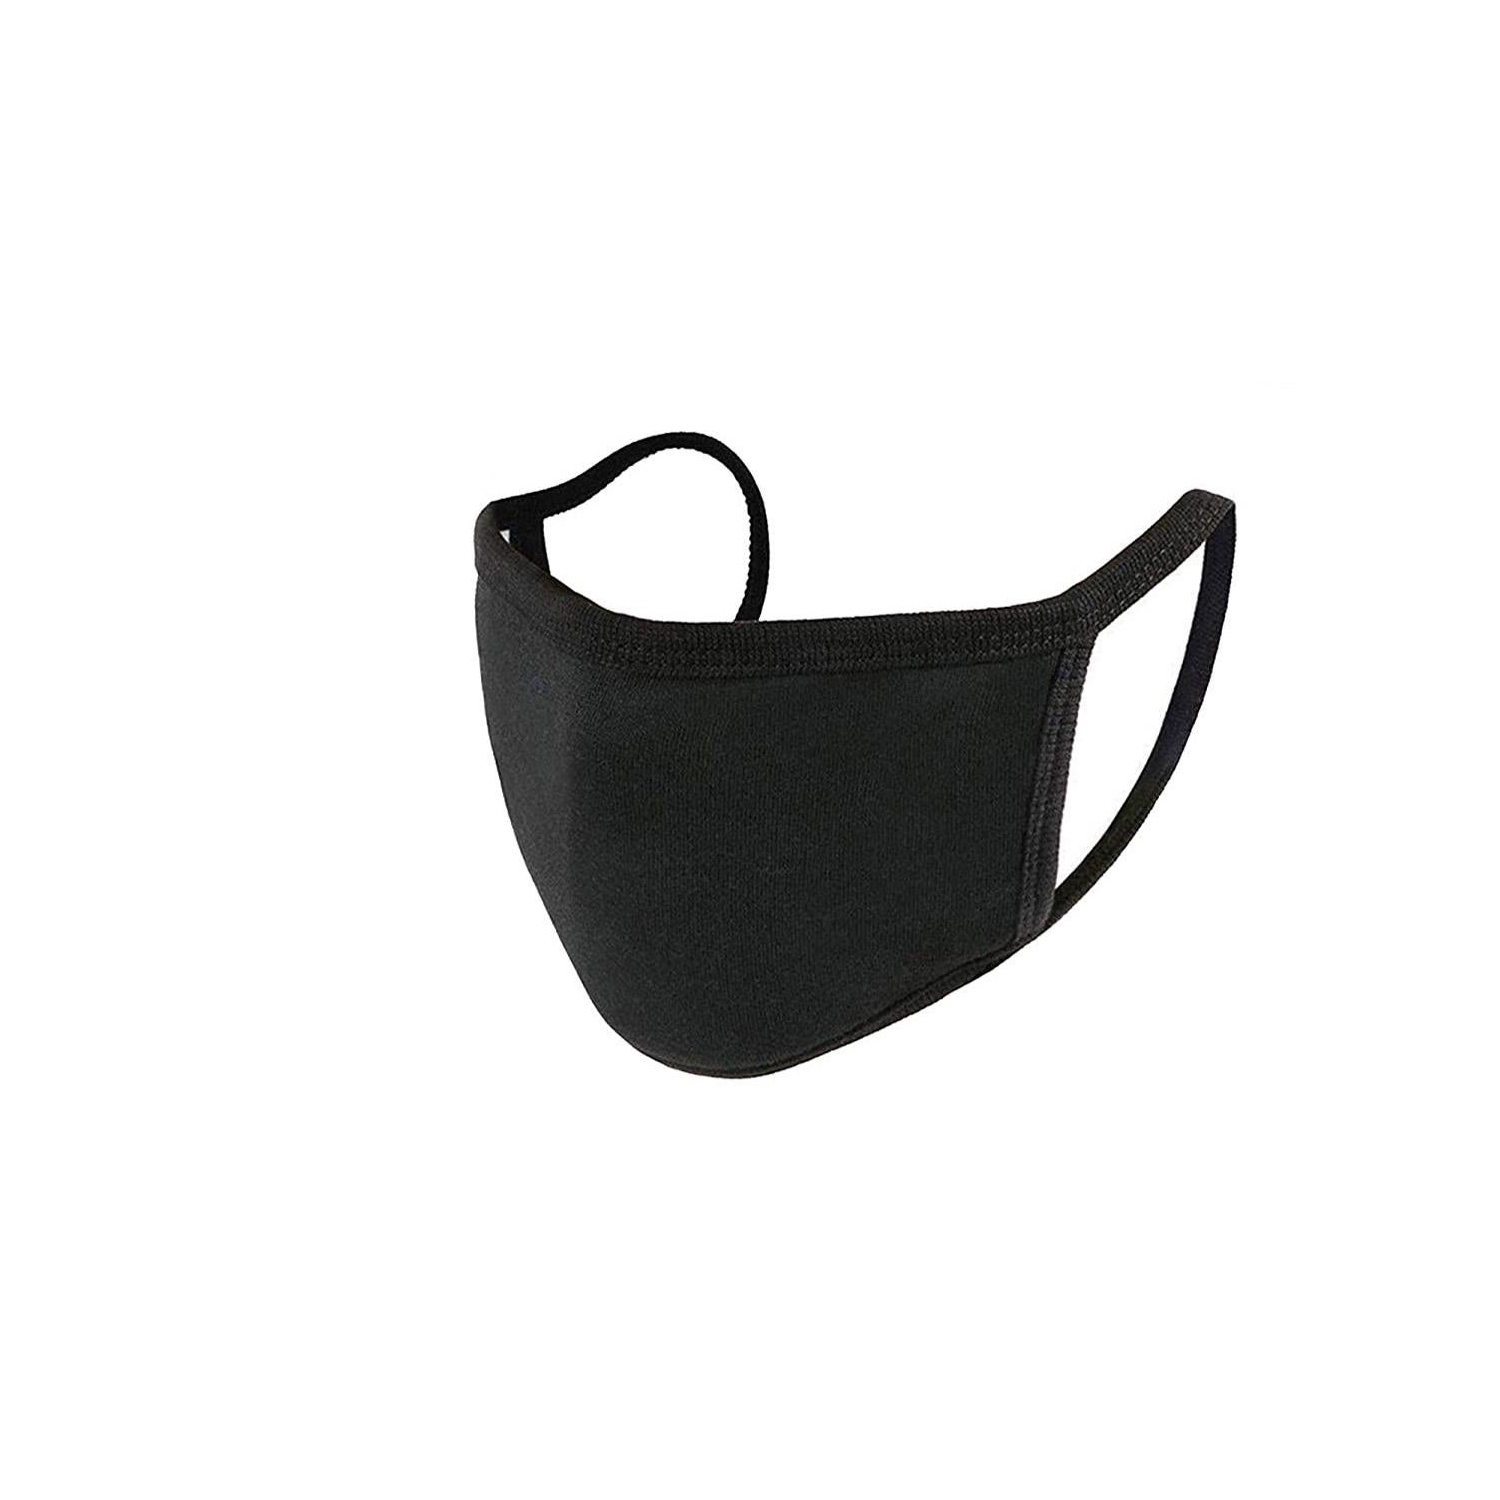 Wiseprotec | wise protec Polypropylene Reuseable Fashion Mask (Black, Without Valve) for Unisex